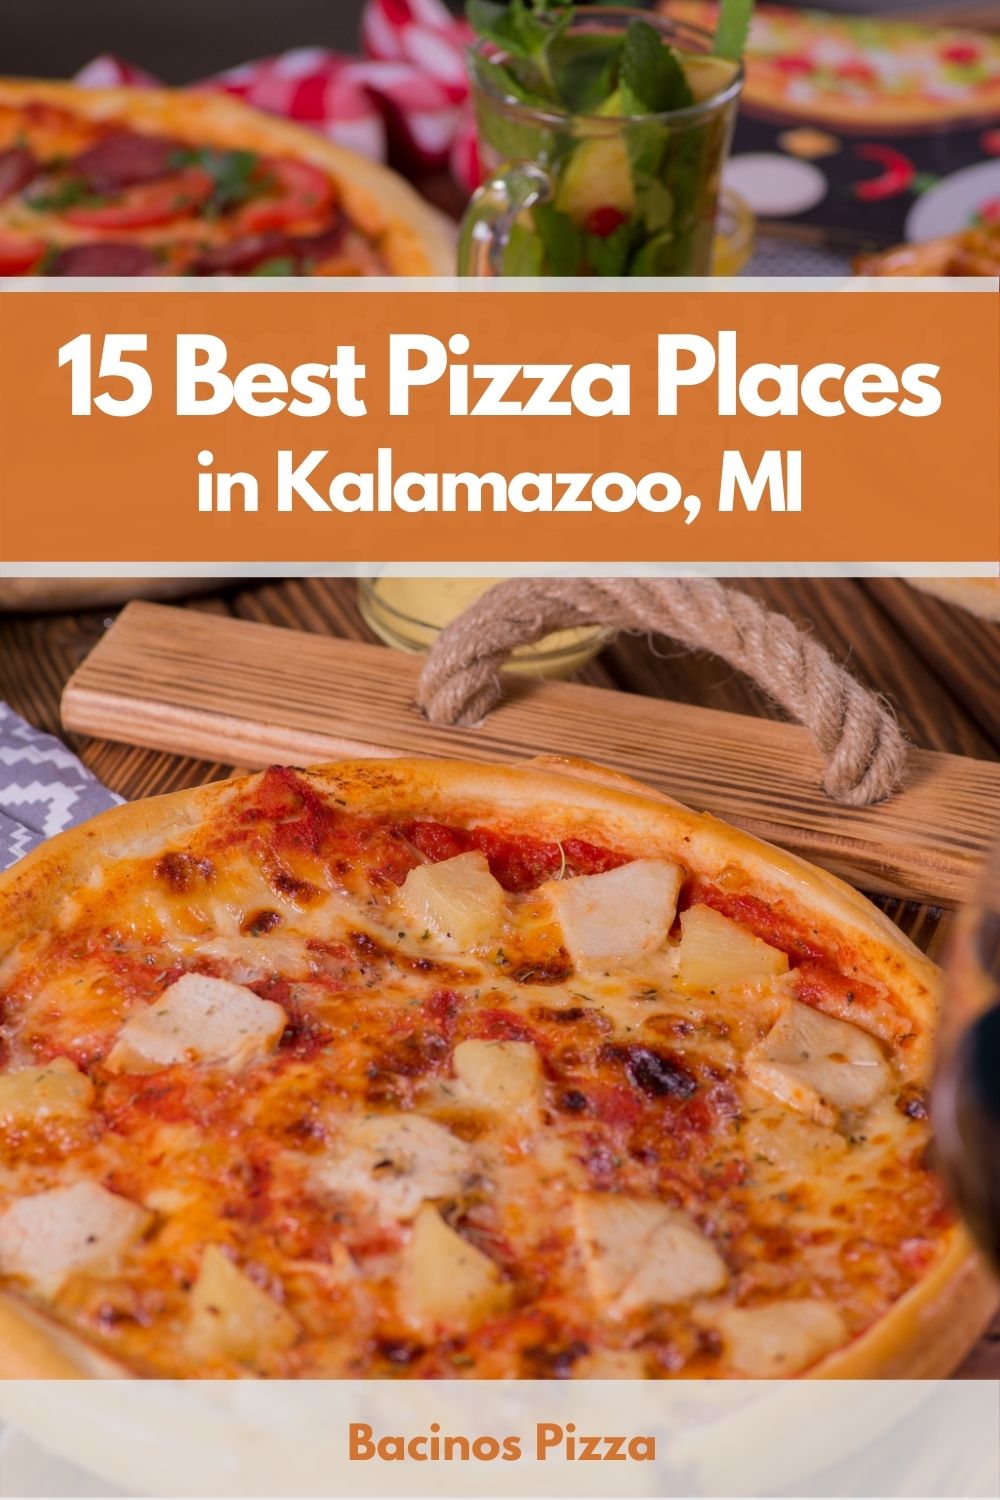 15 Best Pizza Places in Kalamazoo, MI pin